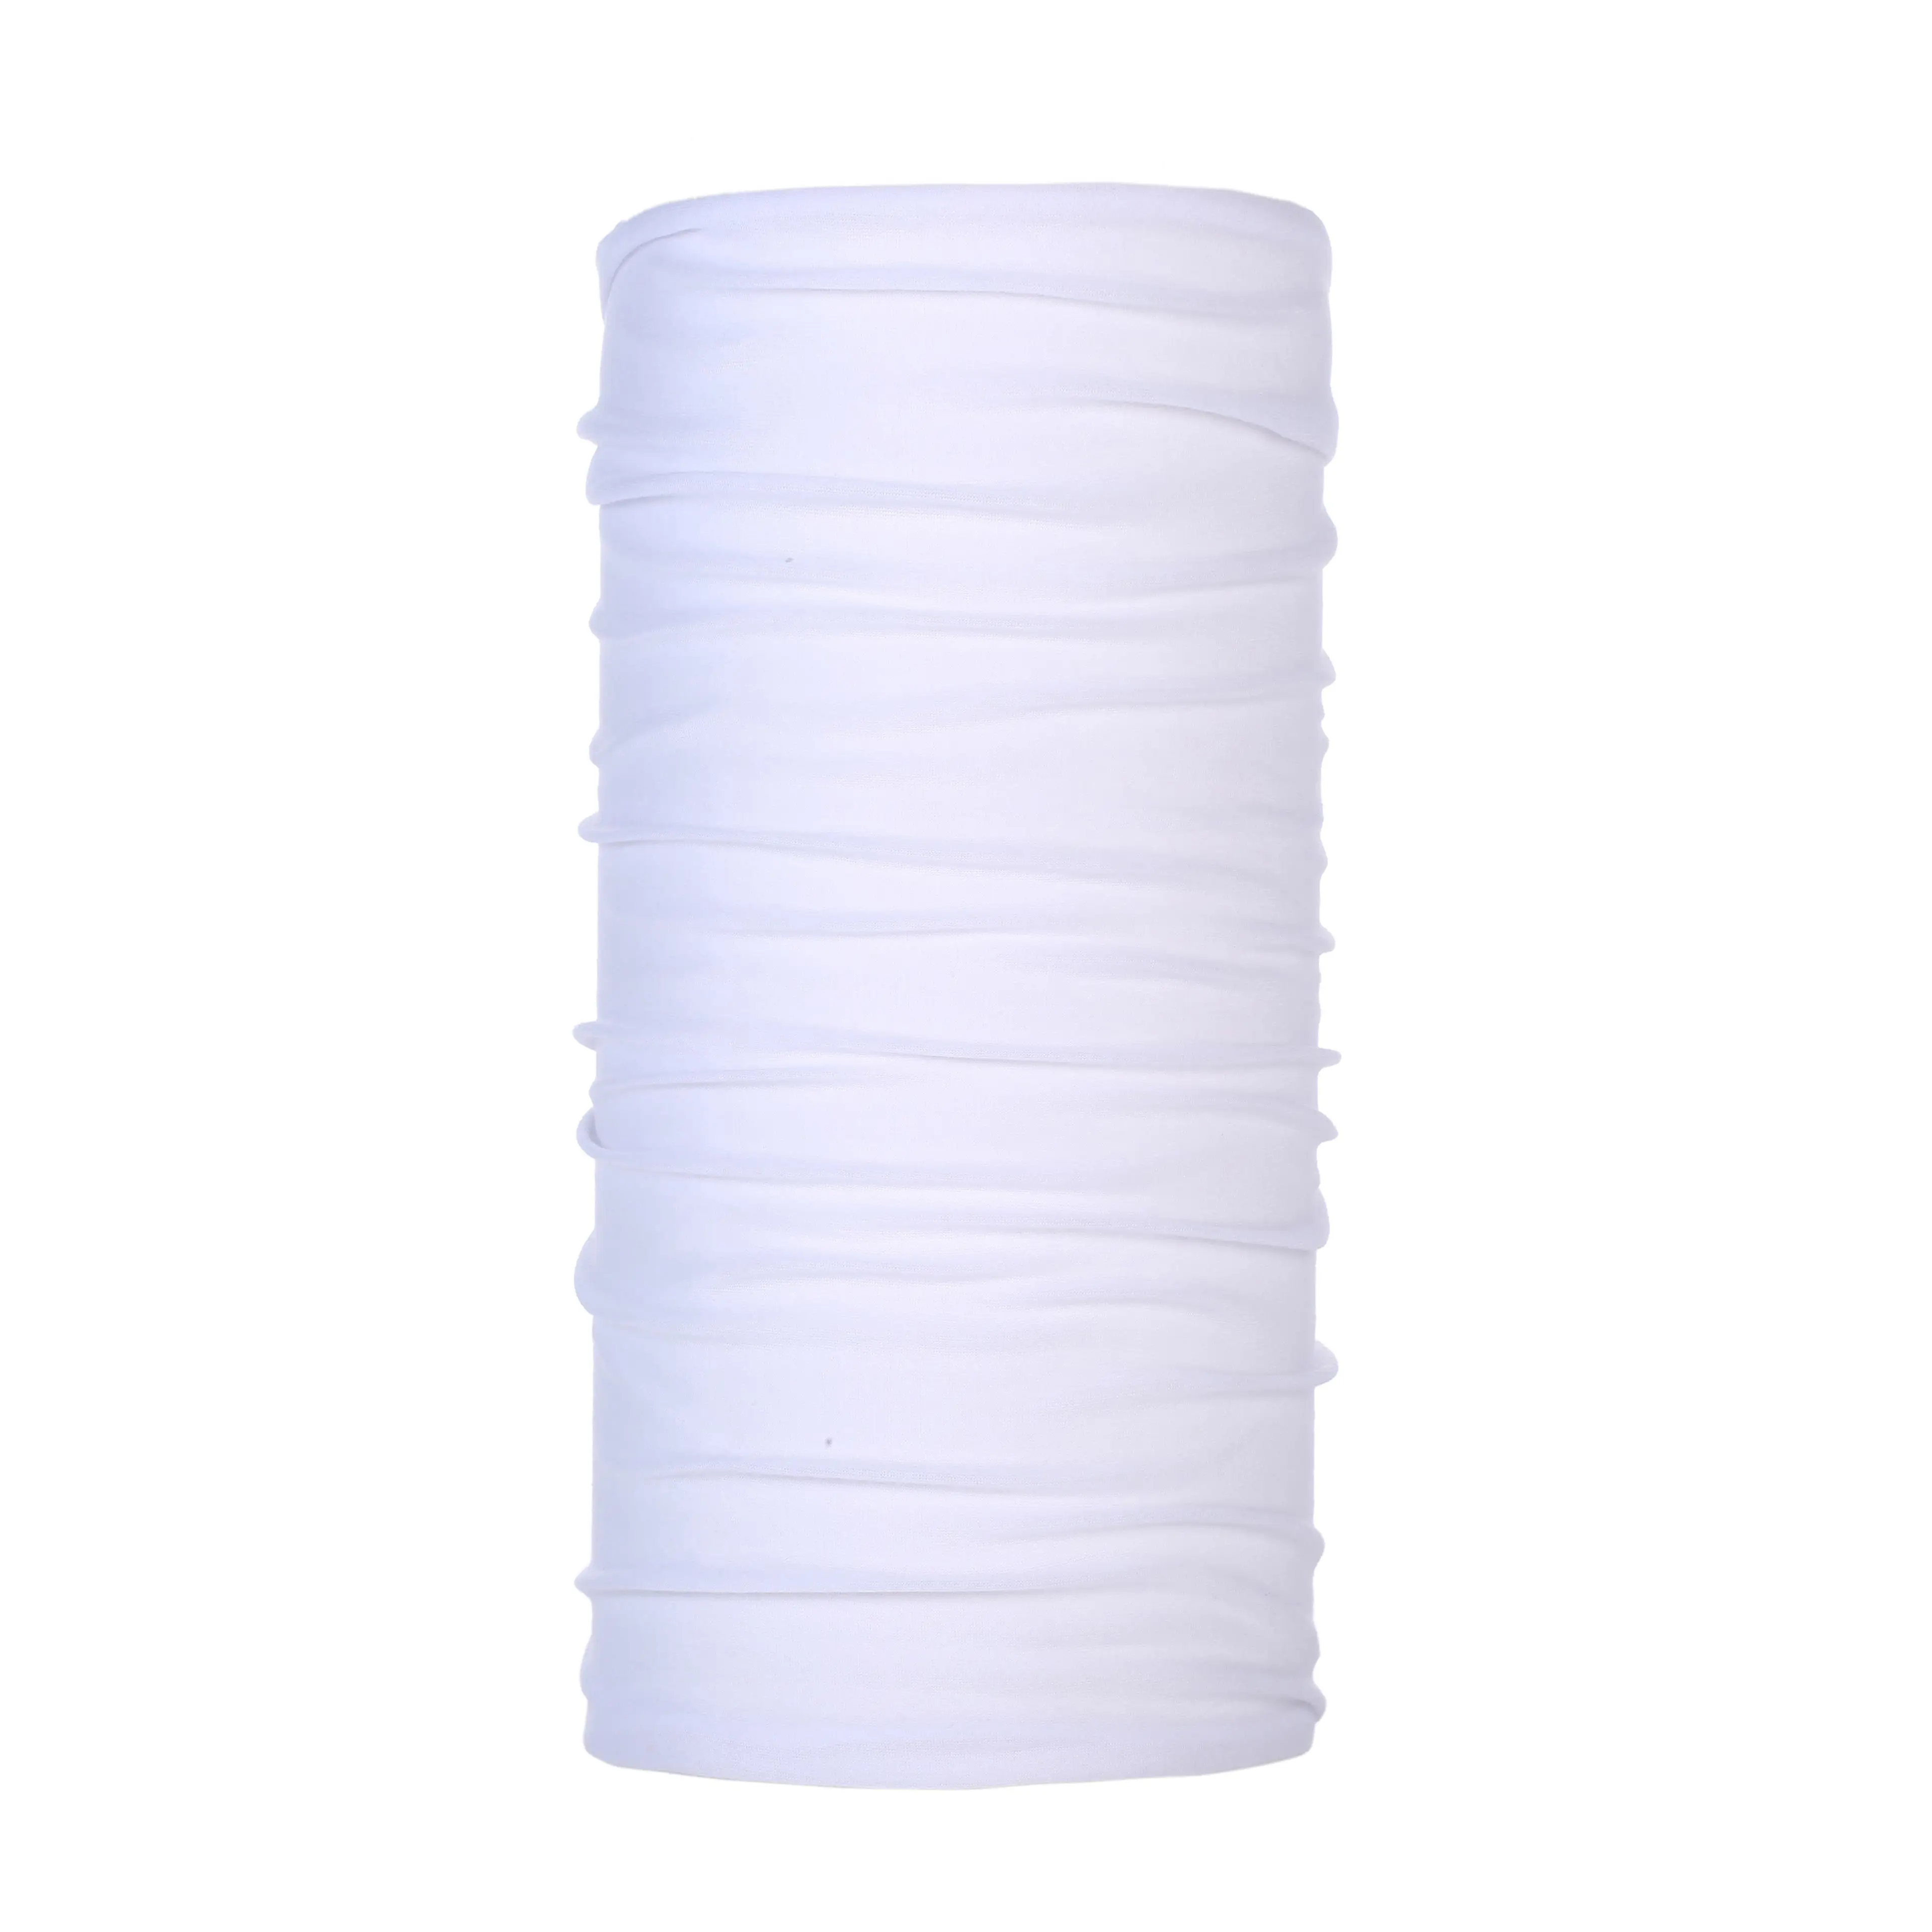 Bandana original blanc sans couture tissu basique, bandana blanc en tube, bandana multifonctionnel blanc vierge